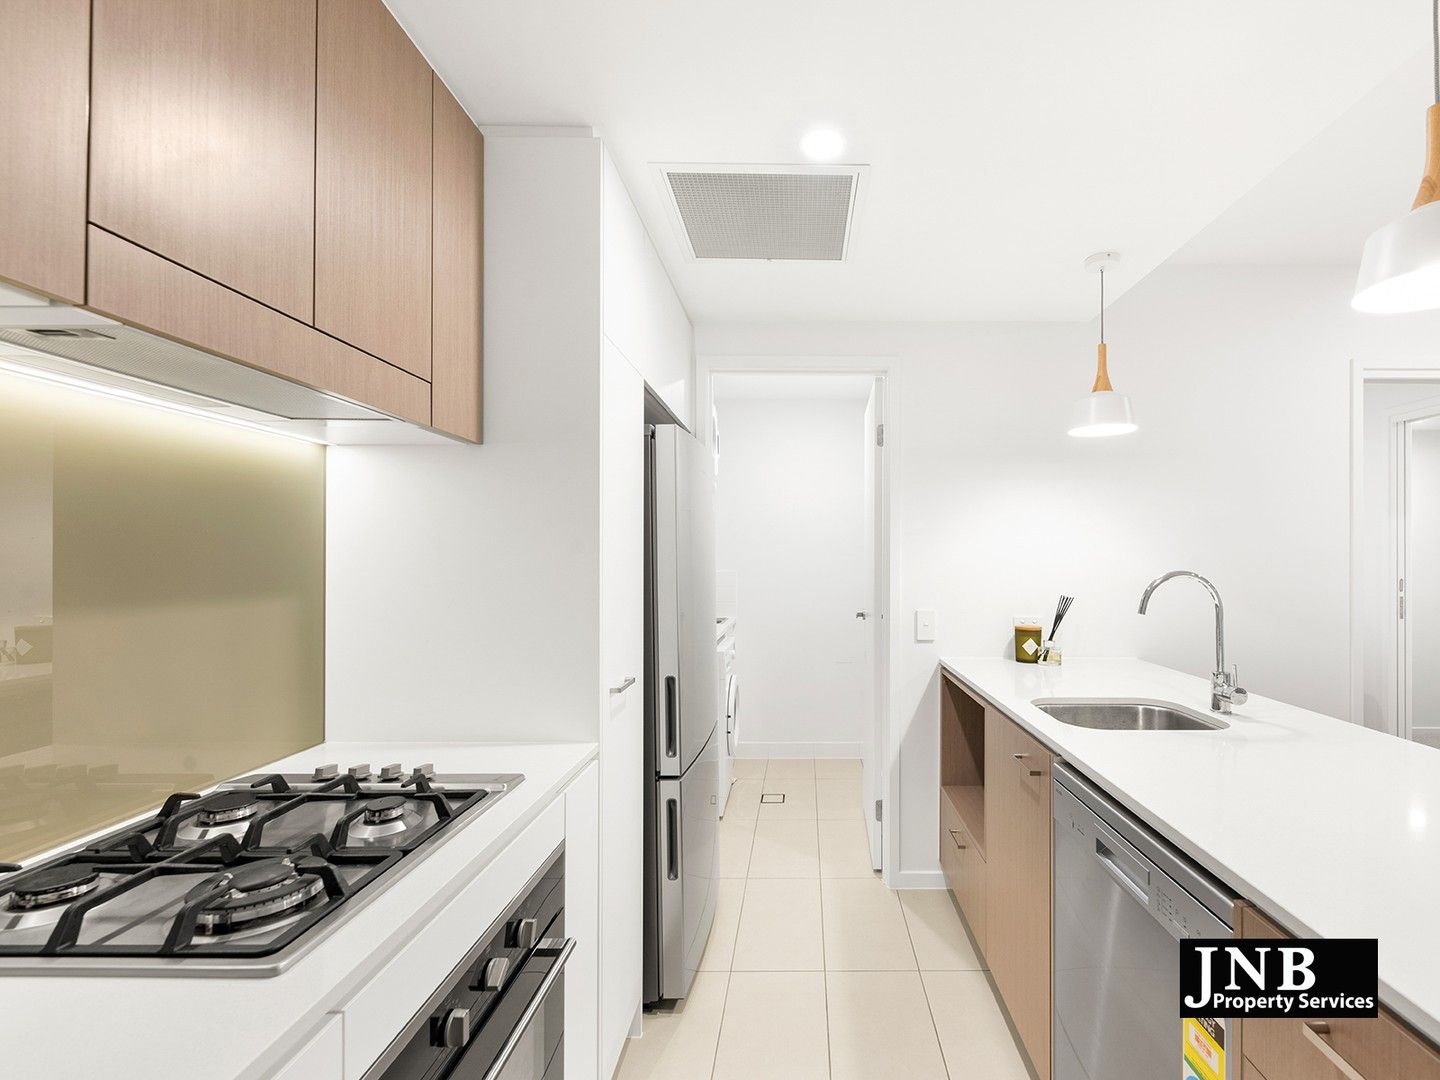 2 bedrooms Apartment / Unit / Flat in 3404/16 Aspinall Street NUNDAH QLD, 4012